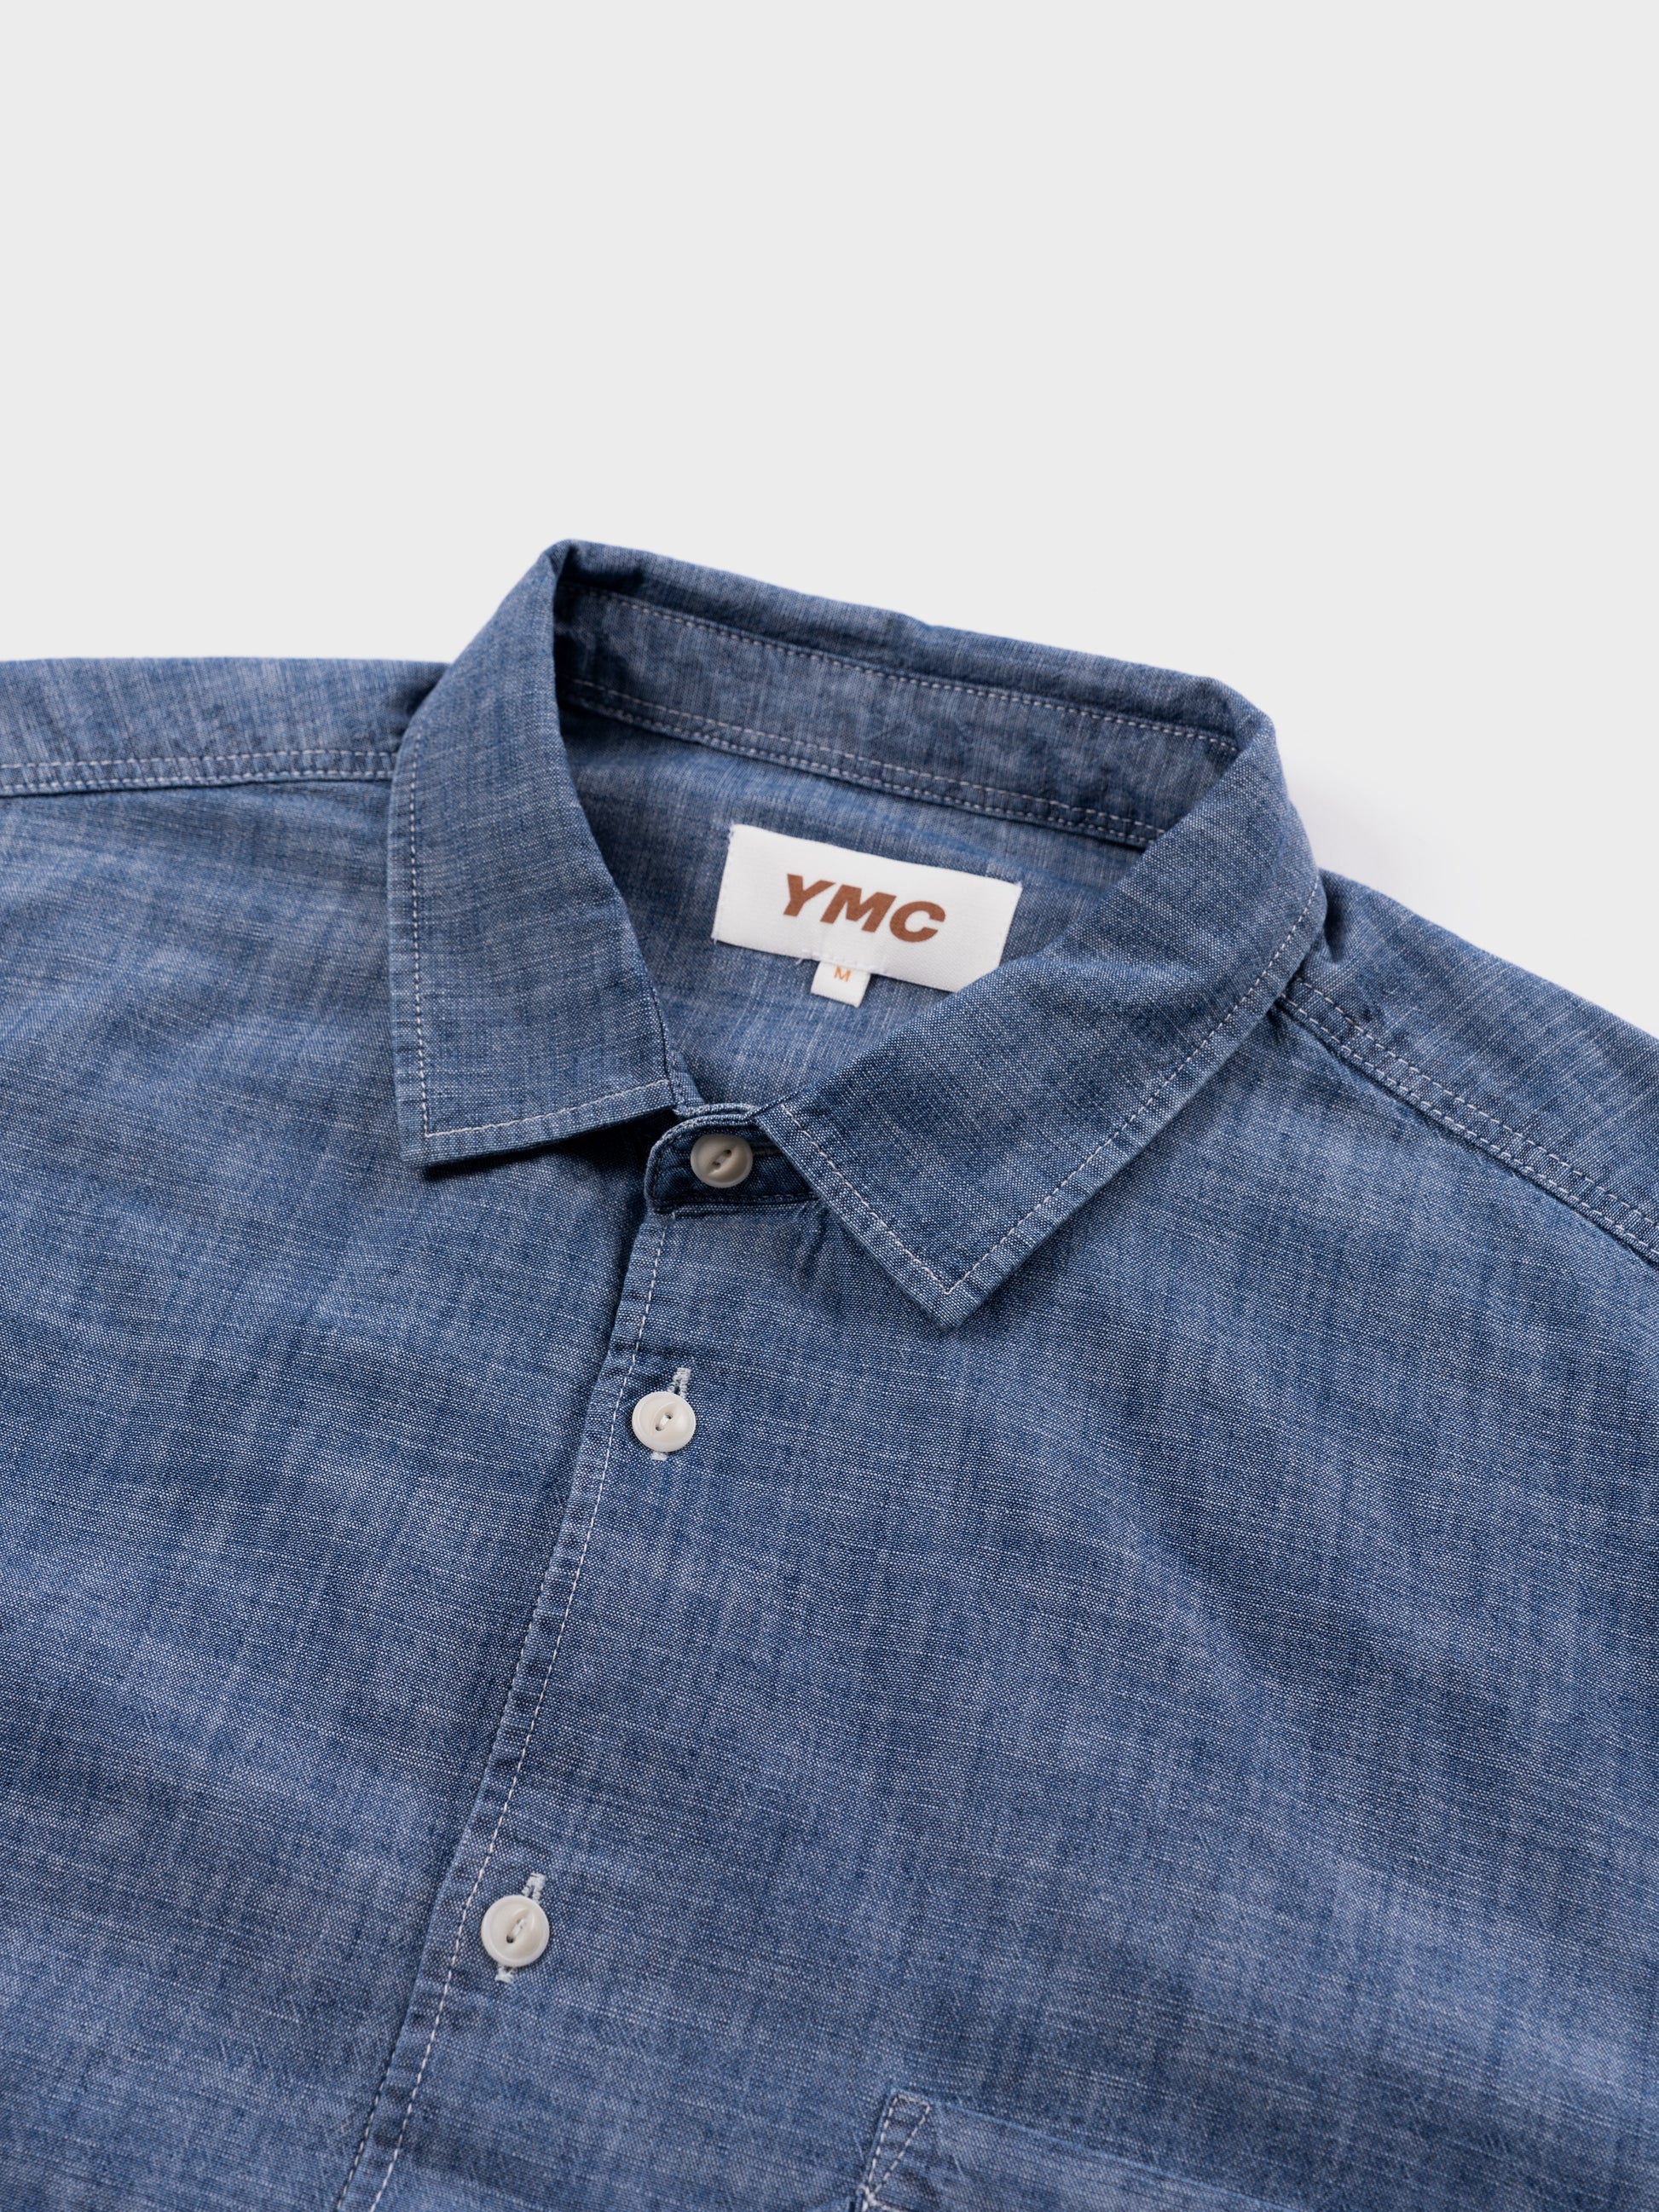 YMC Curtis Shirt - Light Indigo